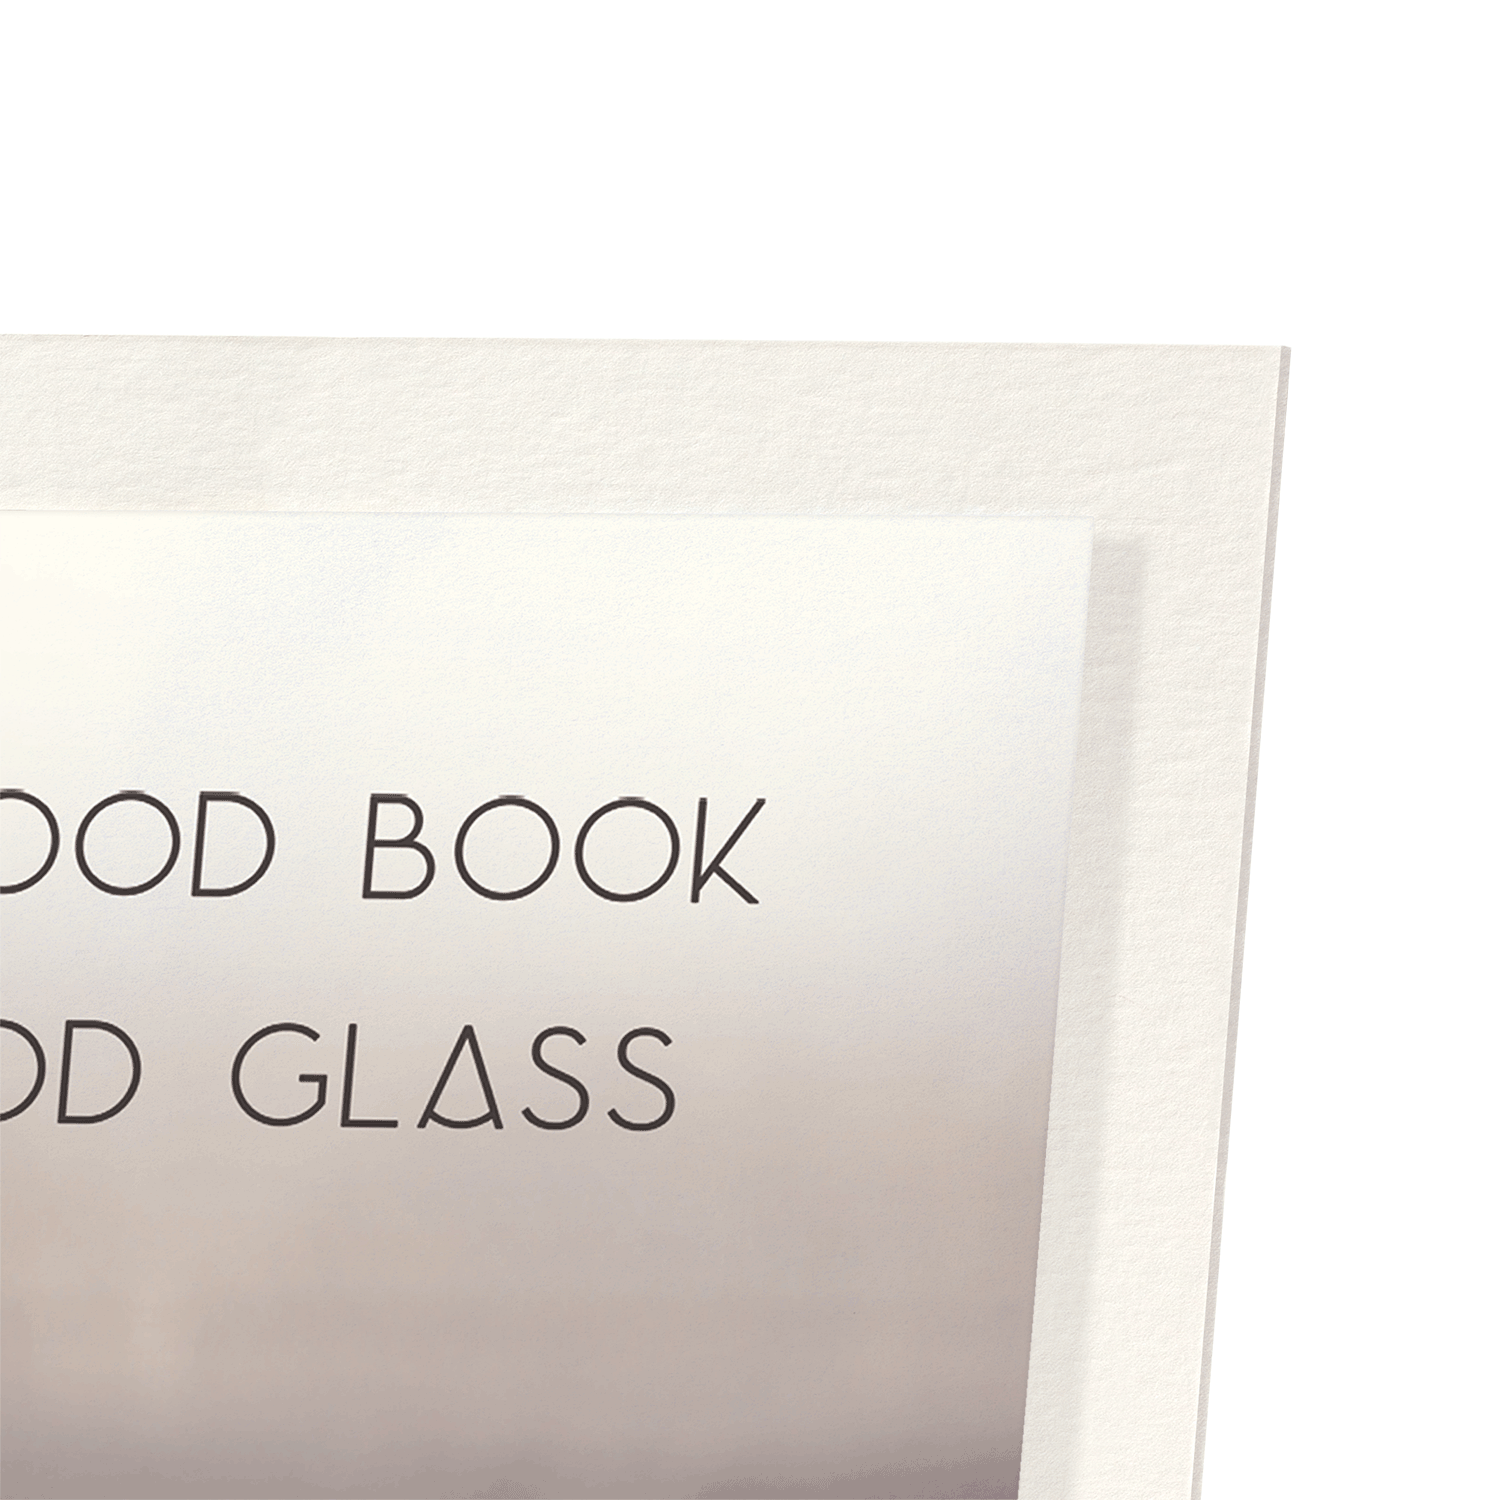 GOOD BOOK AND WINE: Photo Art print